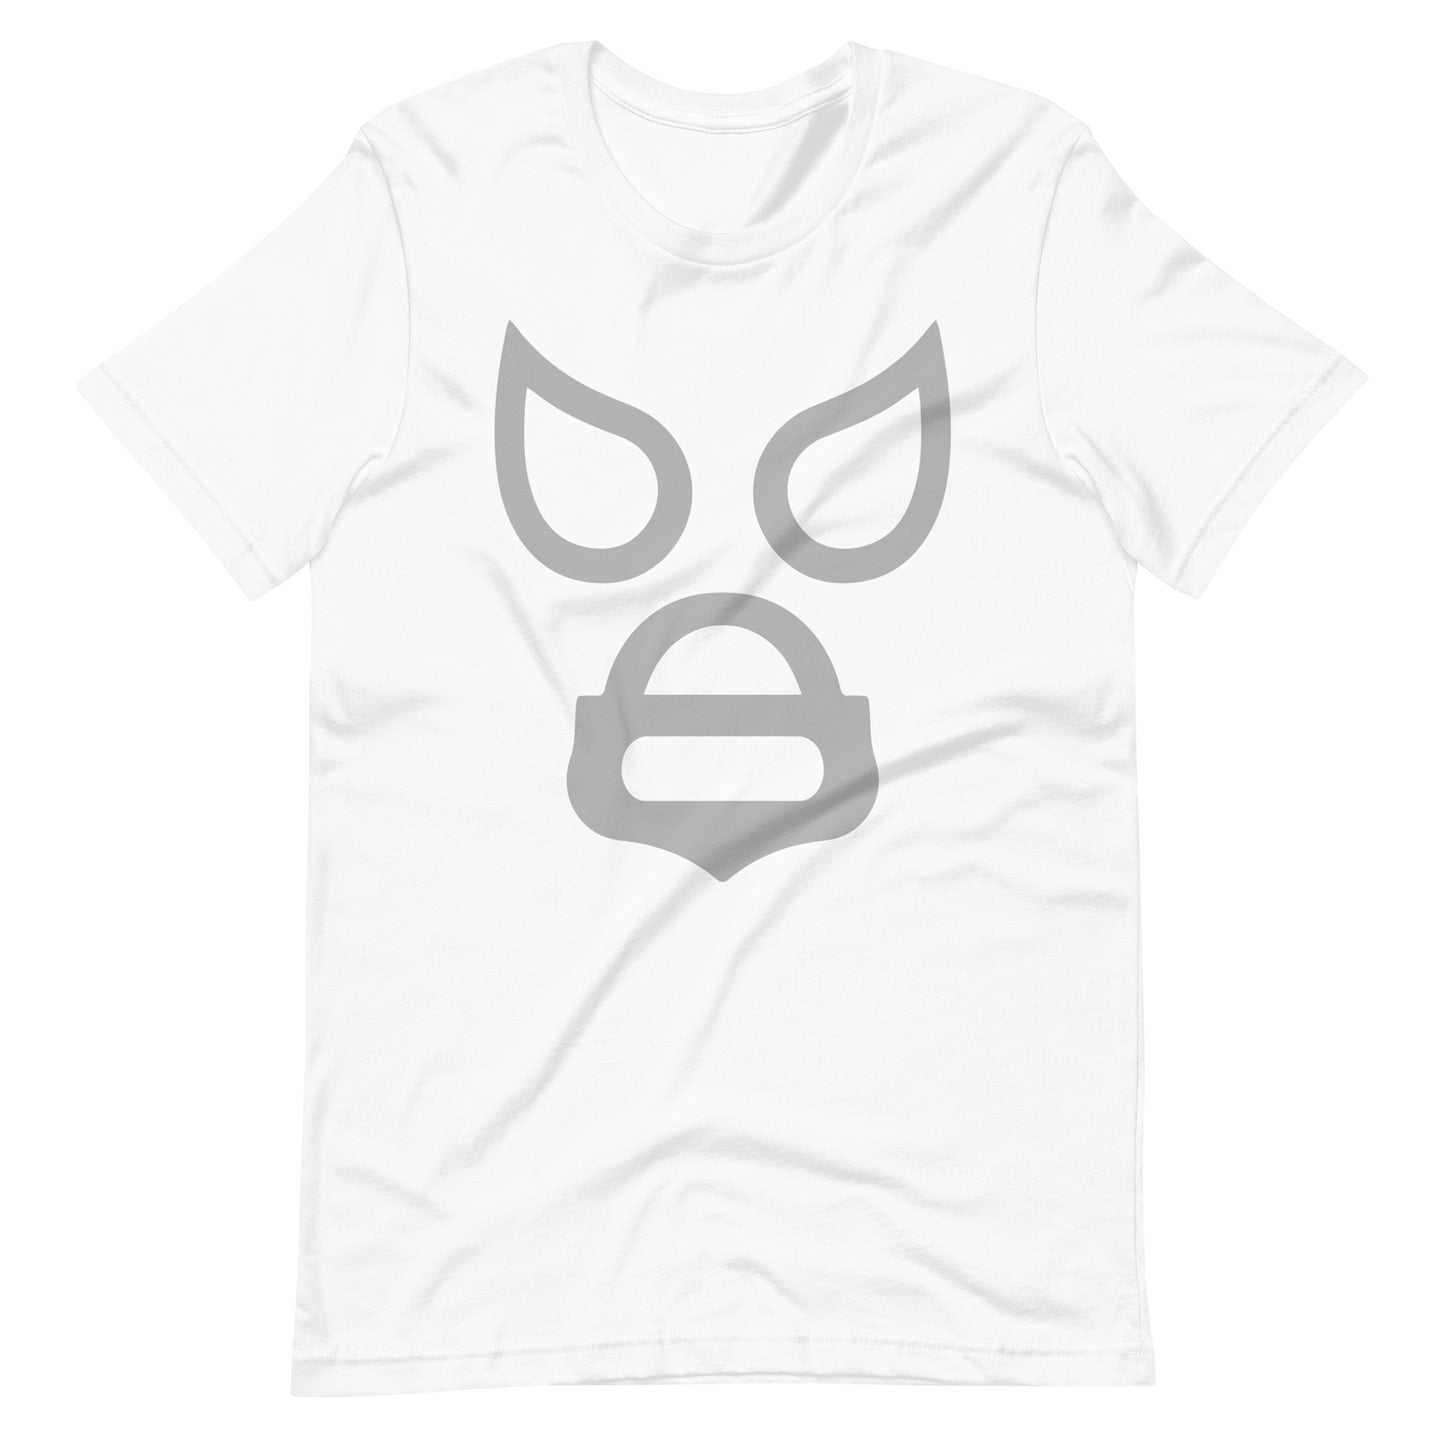 El Santo Mexican Wrestler Mask Lucha Libre Unisex T-Shirt